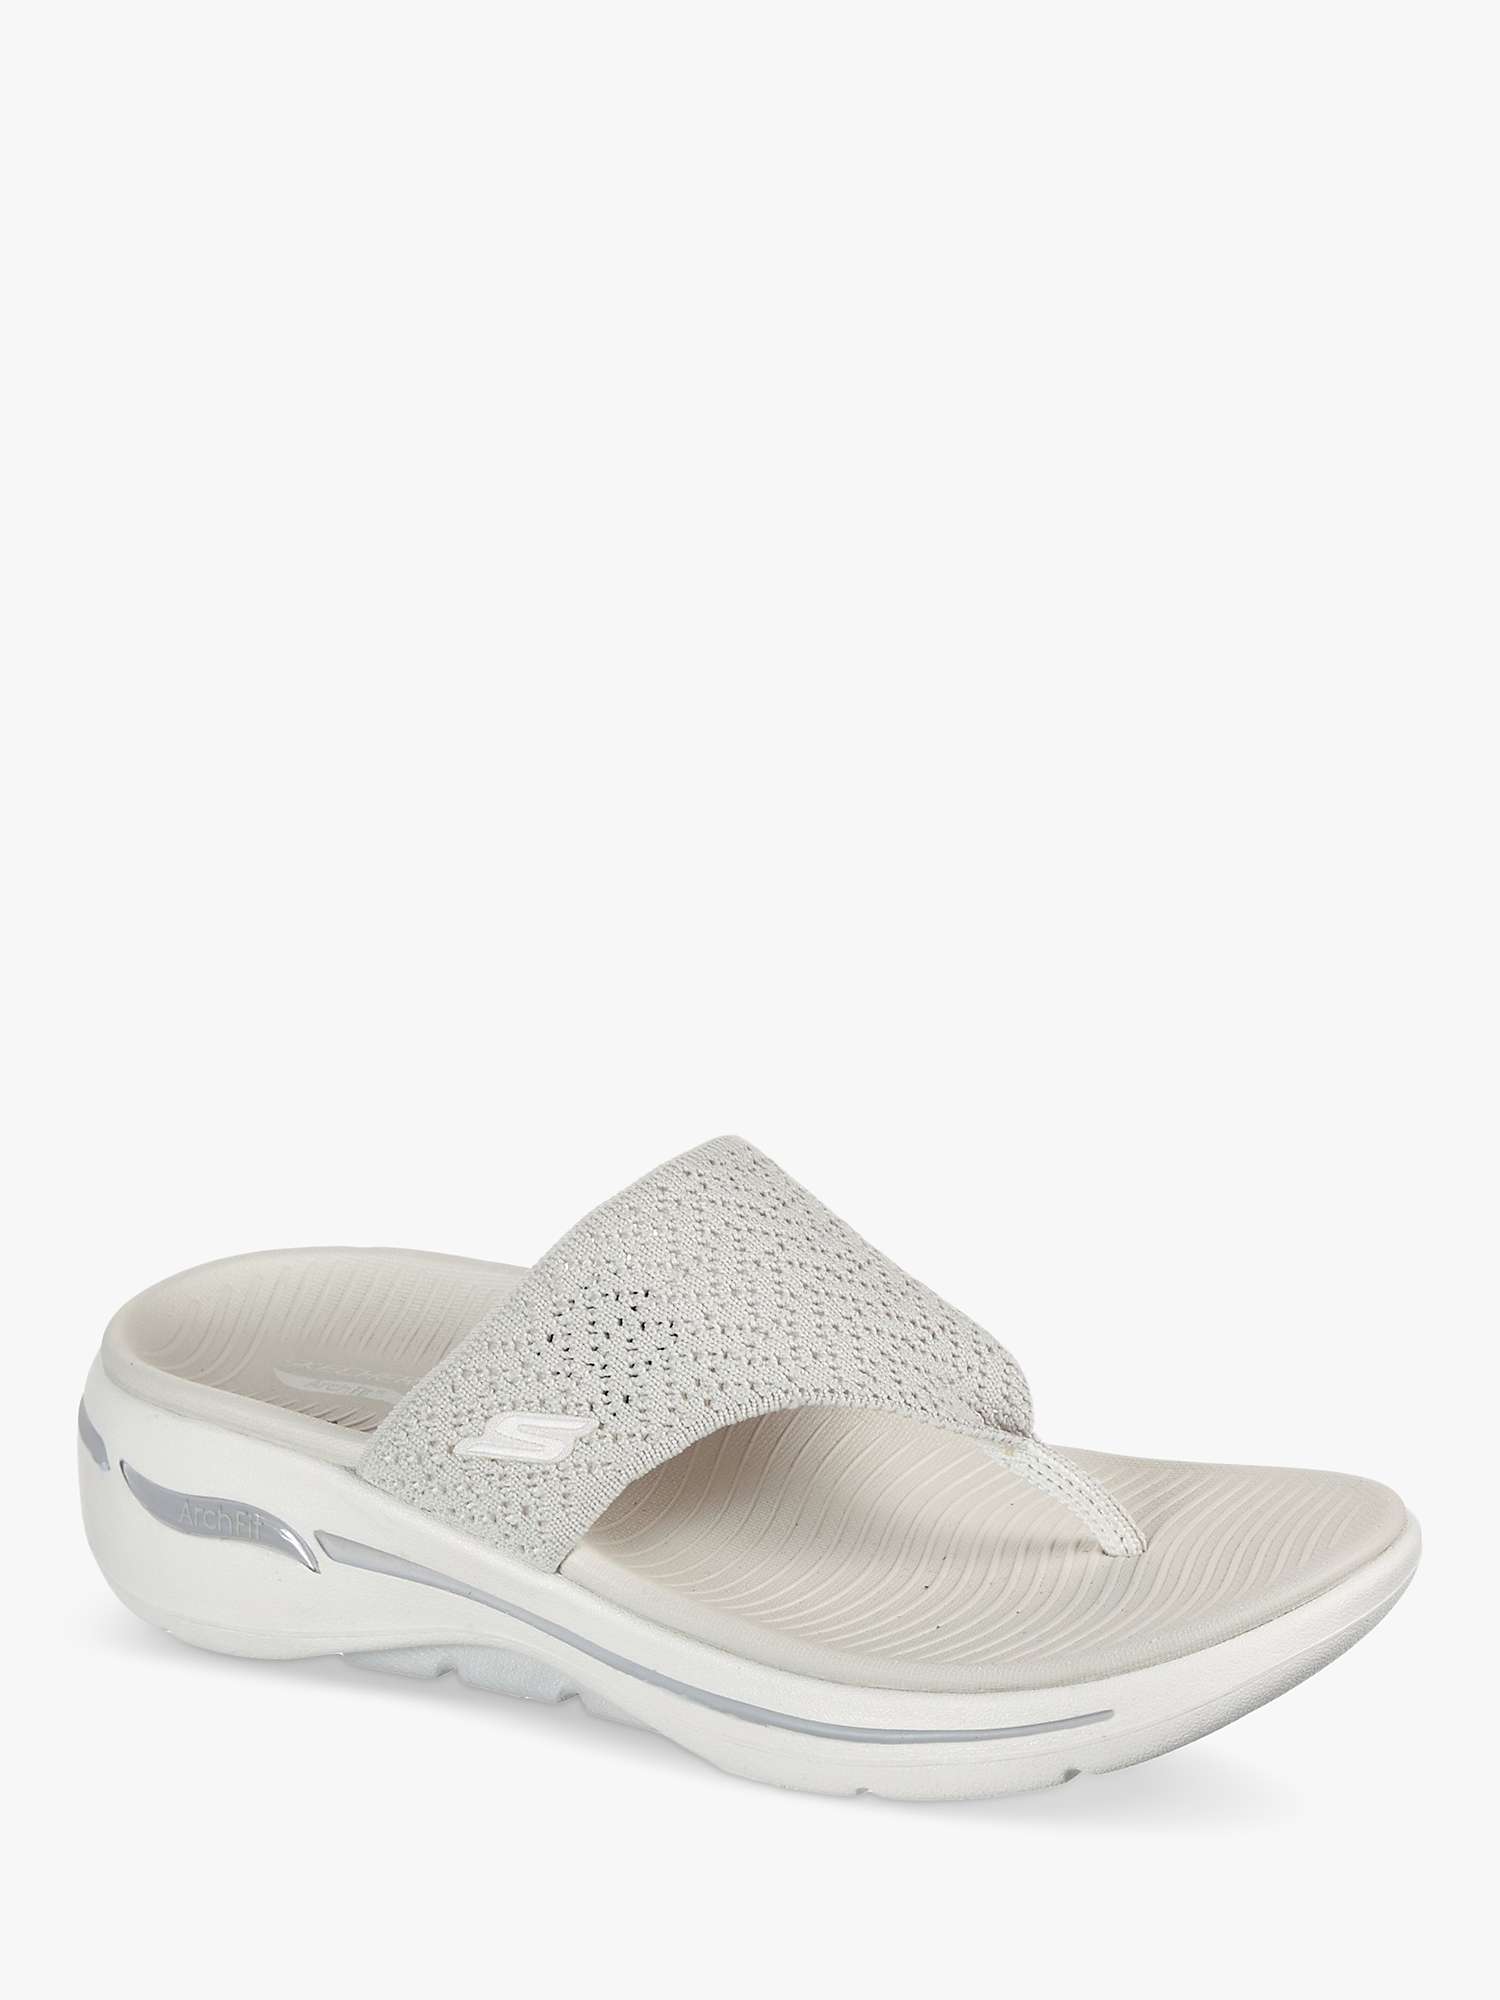 Buy Skechers Go Walk Arch Fit Weekender Summer Sandals Online at johnlewis.com